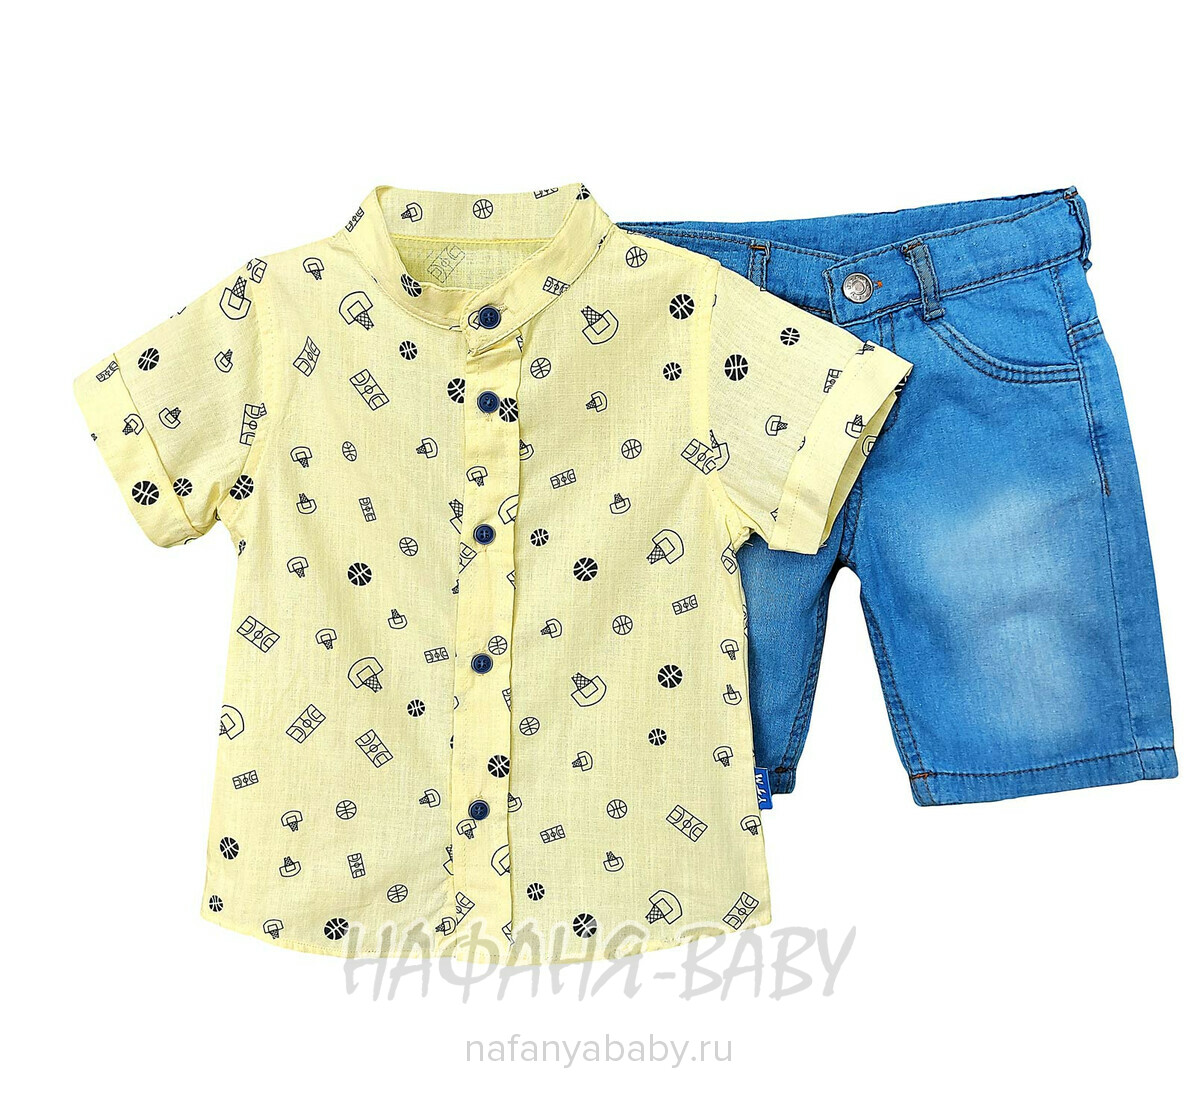 Детский костюм (рубашка + шорты) YTM арт. 511 от 1 до 4 лет, цвет желтый, оптом Турция